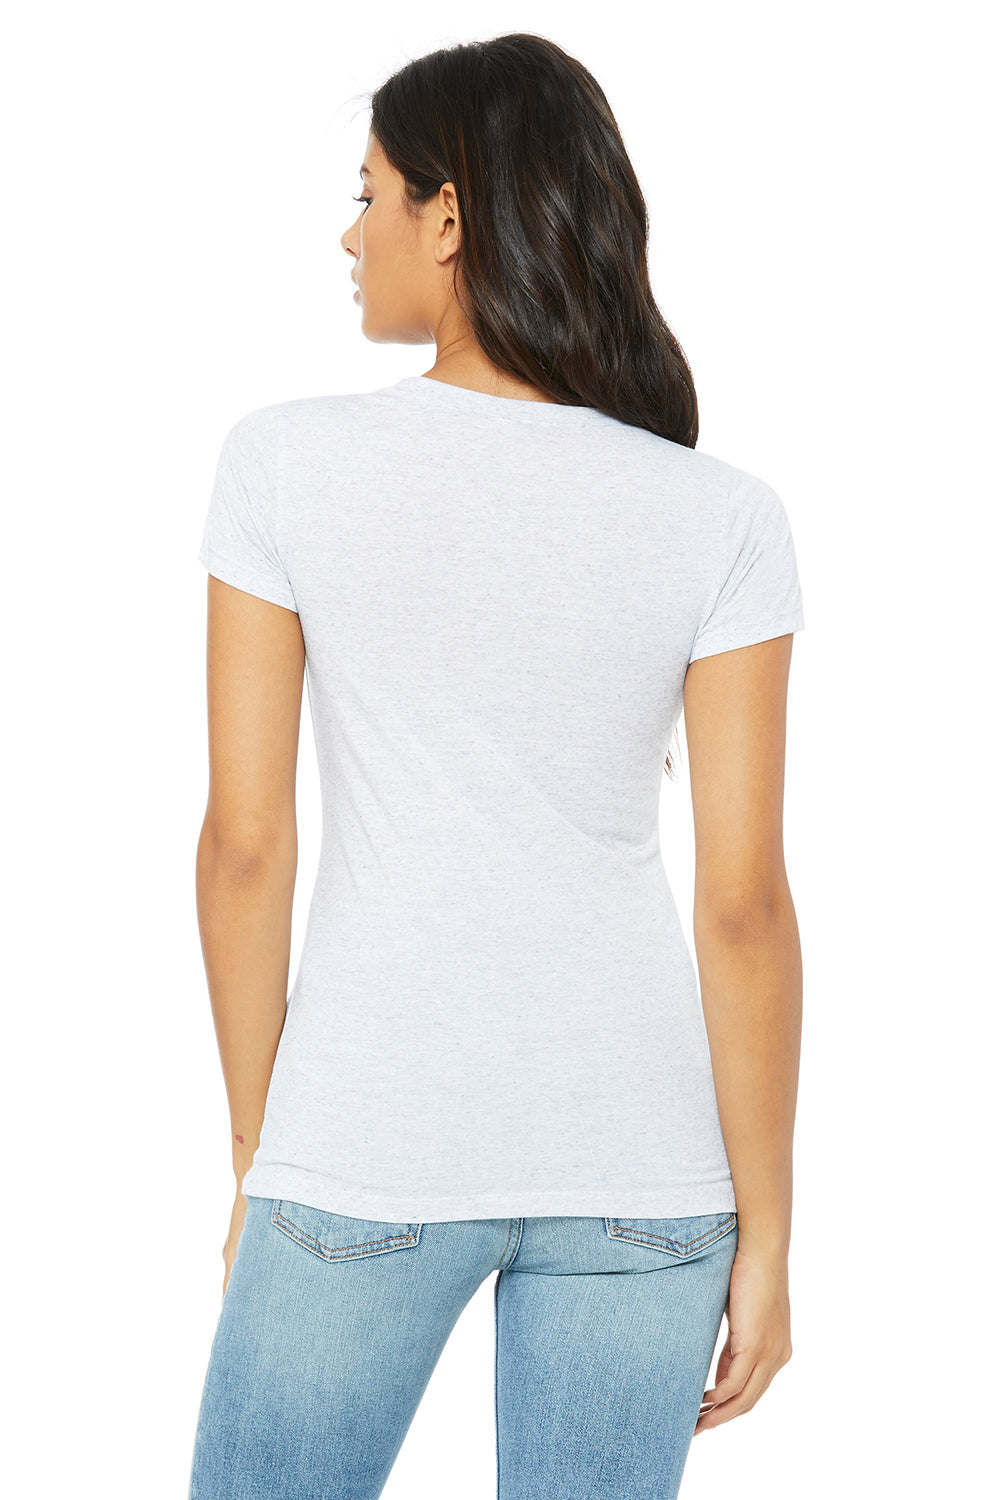 Bella + Canvas B8413 Womens Short Sleeve Crewneck T-Shirt White Fleck Back